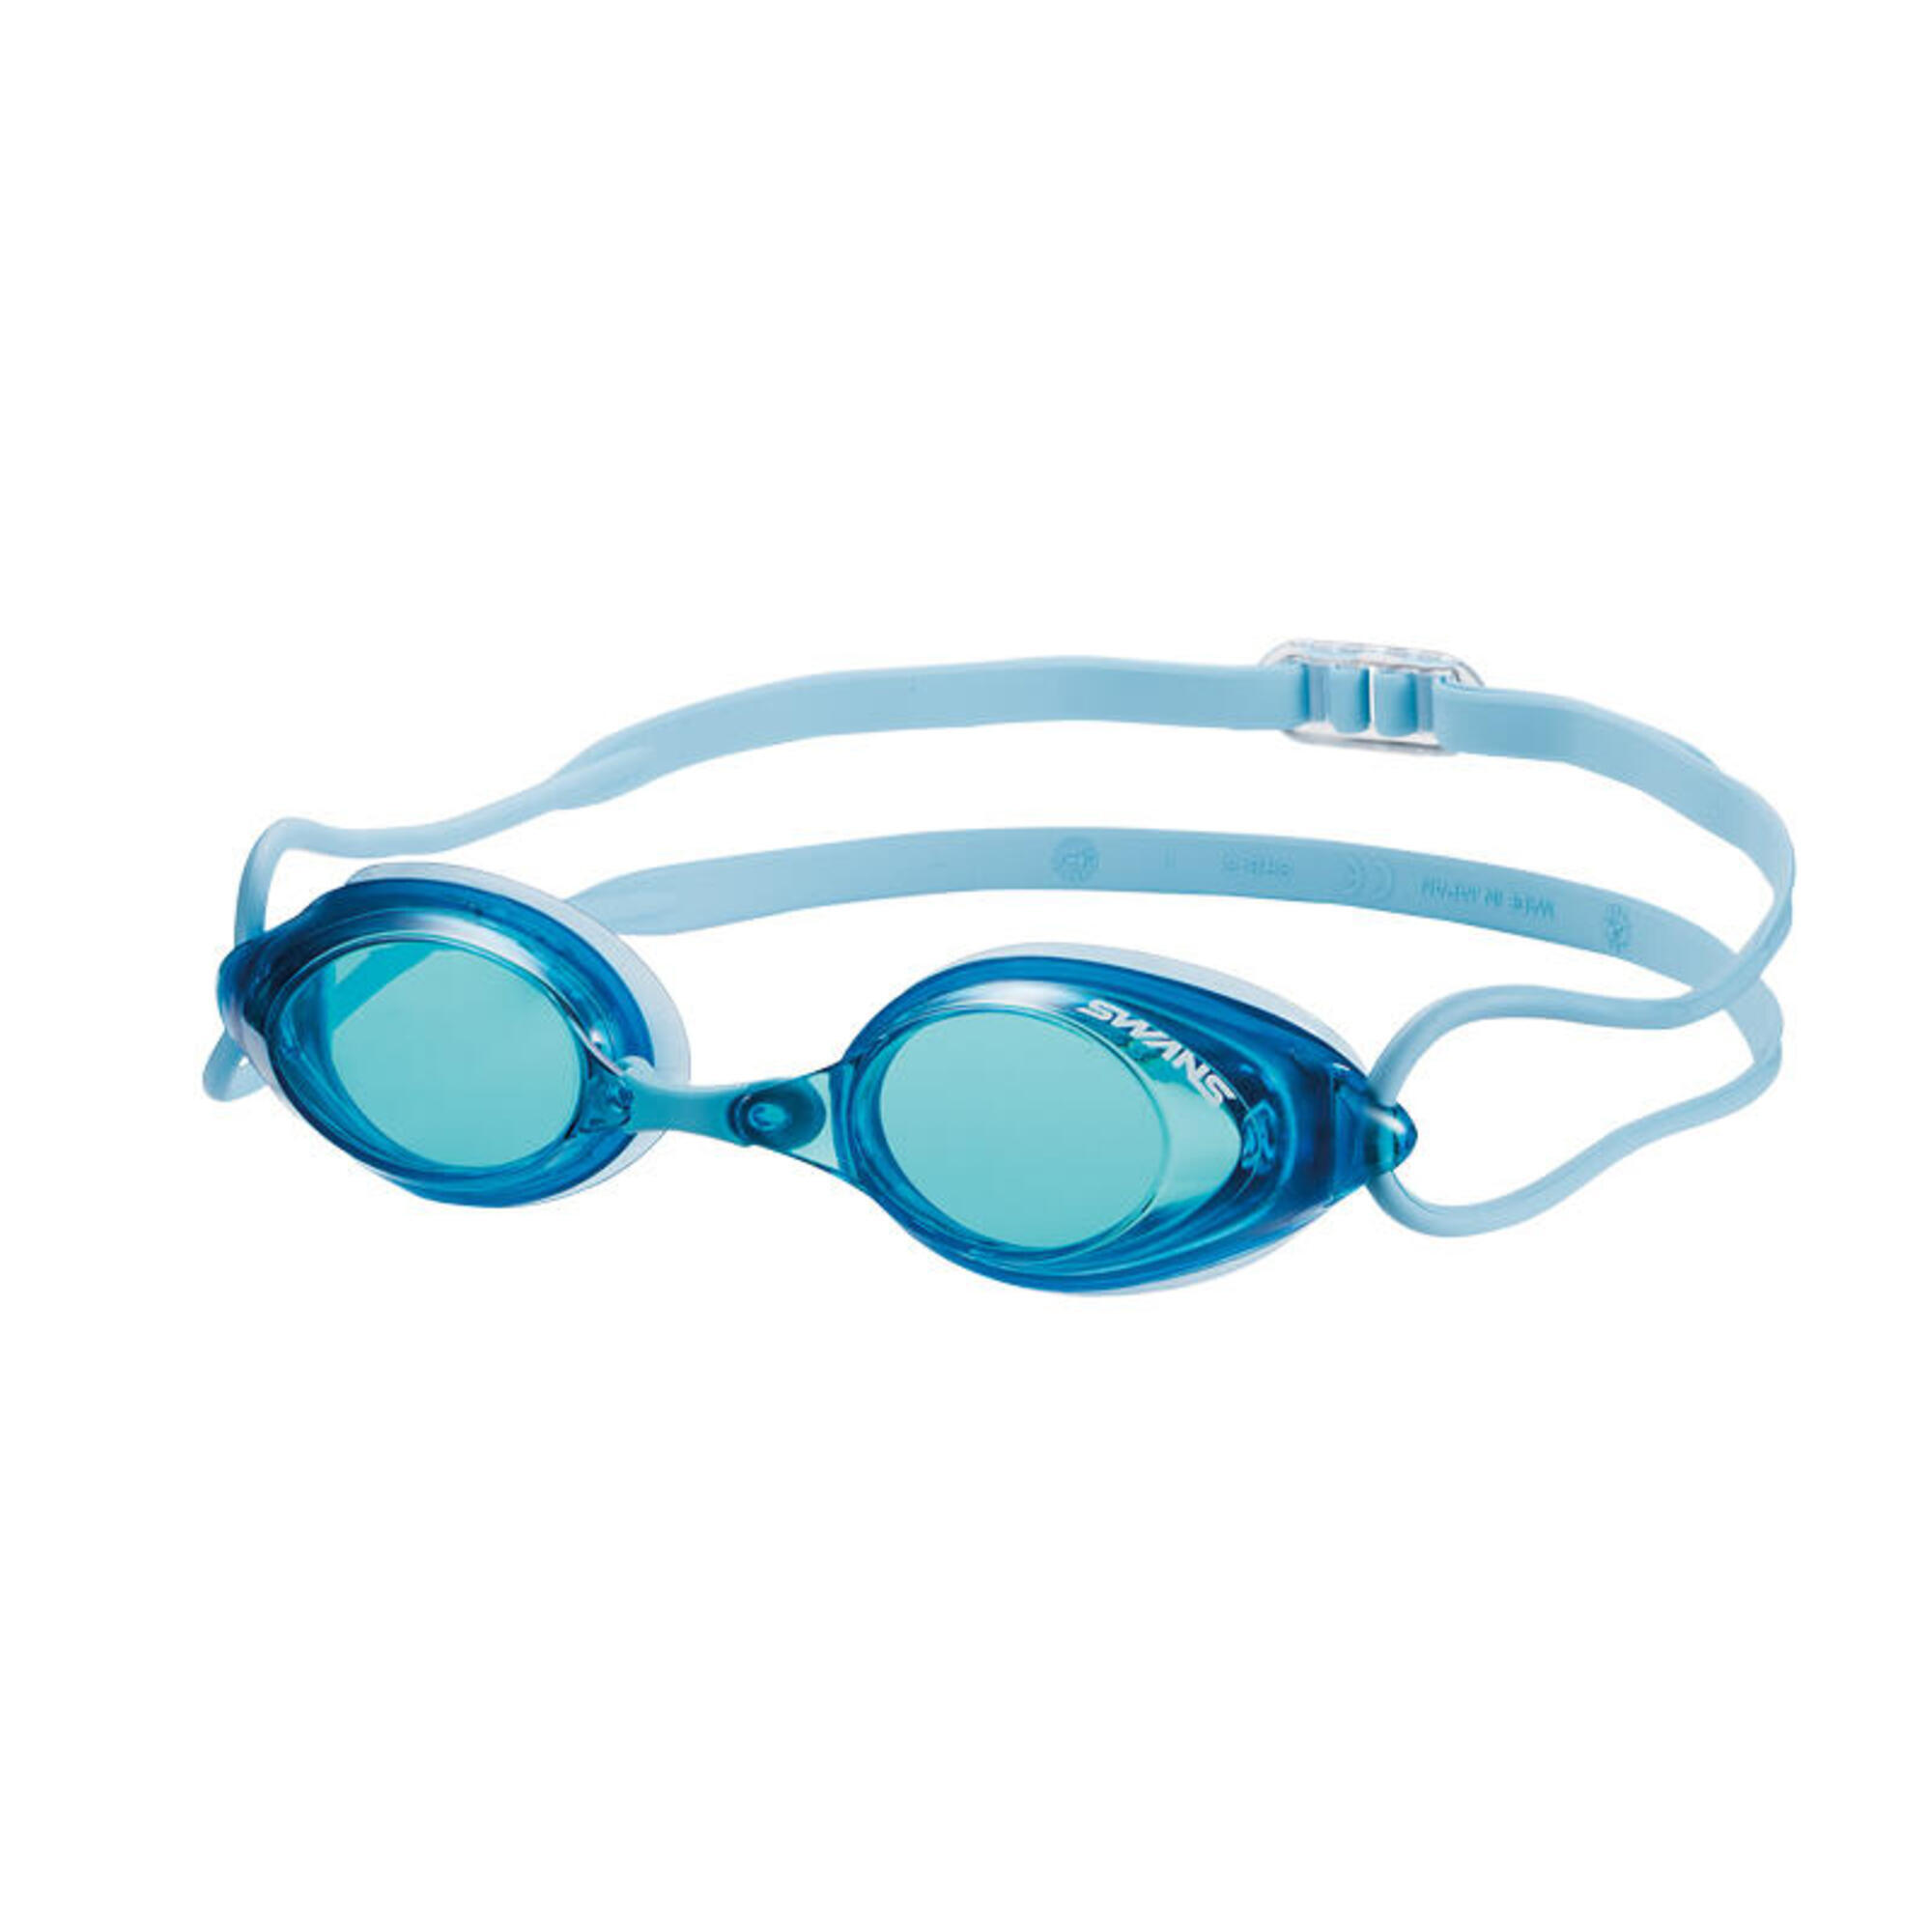 [SWN-SRXN] 競賽泳鏡 - 天藍色